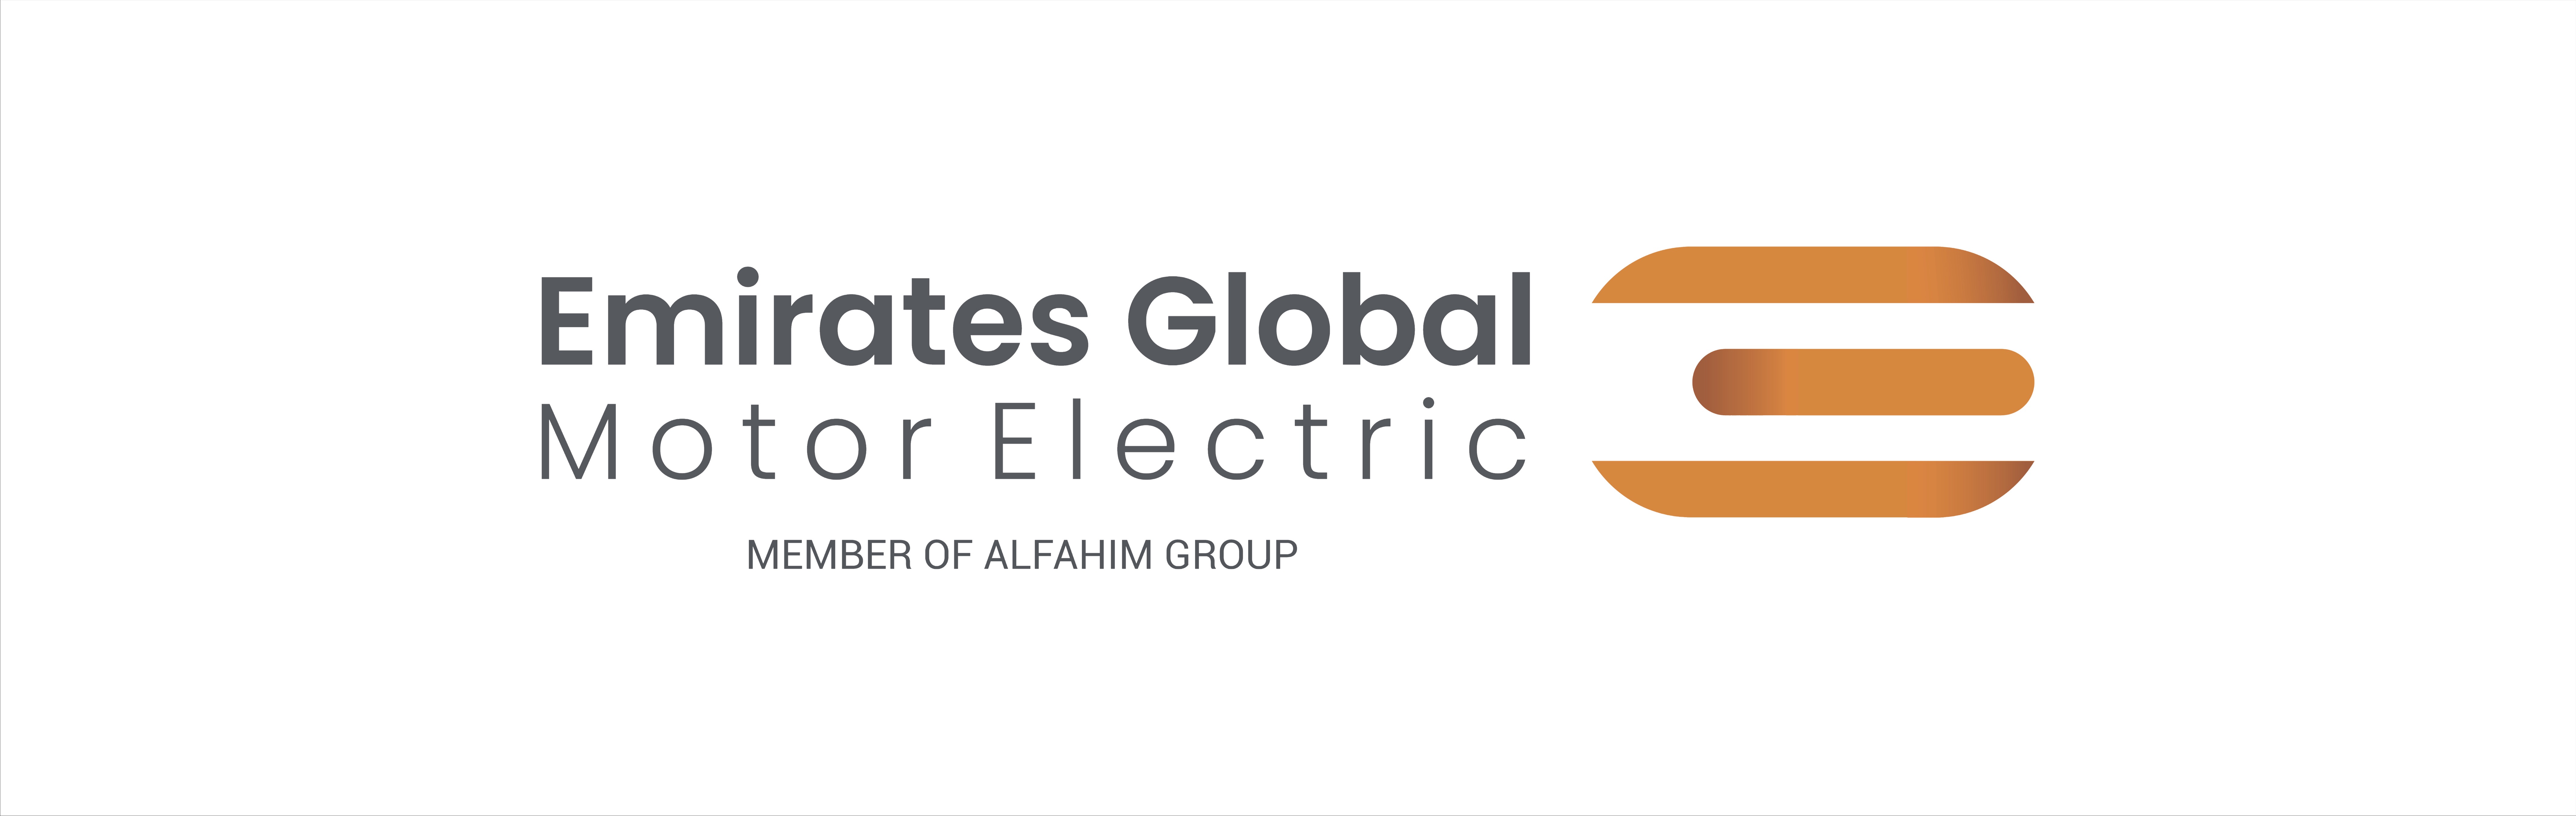 Emirates Global Motor Electric: Member of Alfahim Group